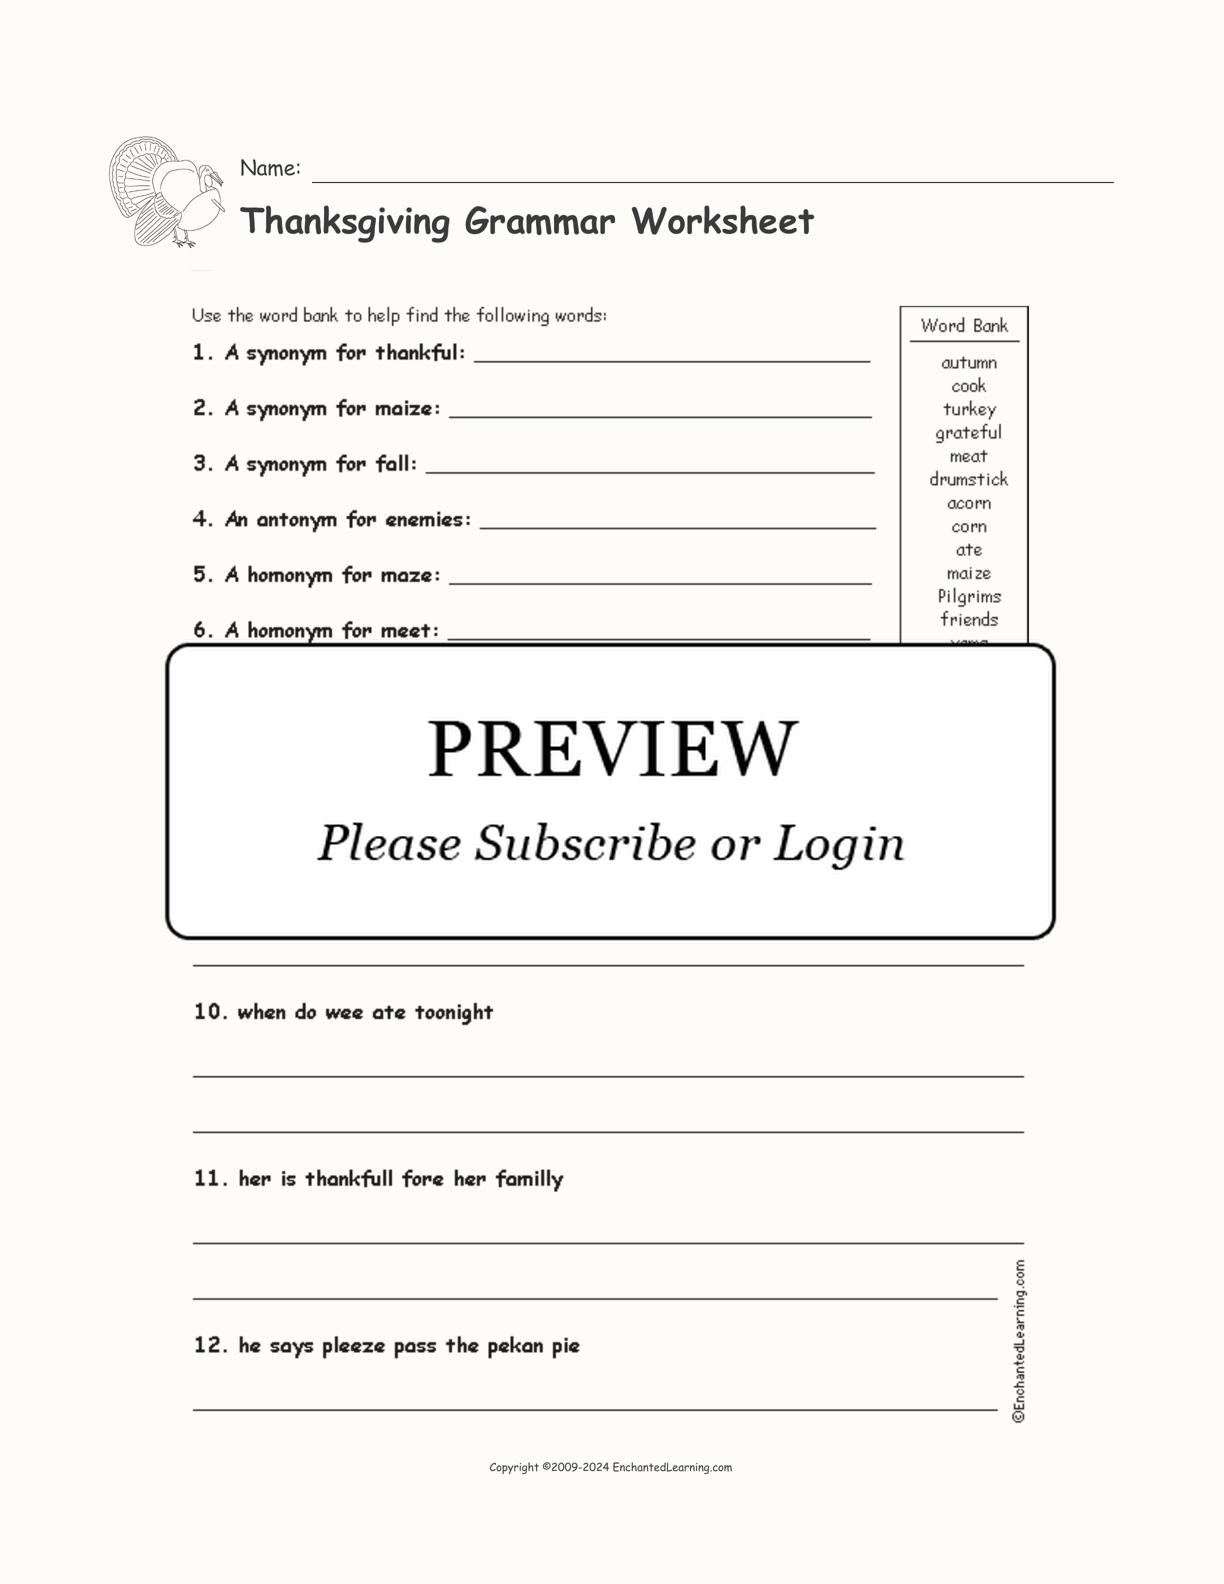 Thanksgiving Grammar Worksheet interactive worksheet page 1